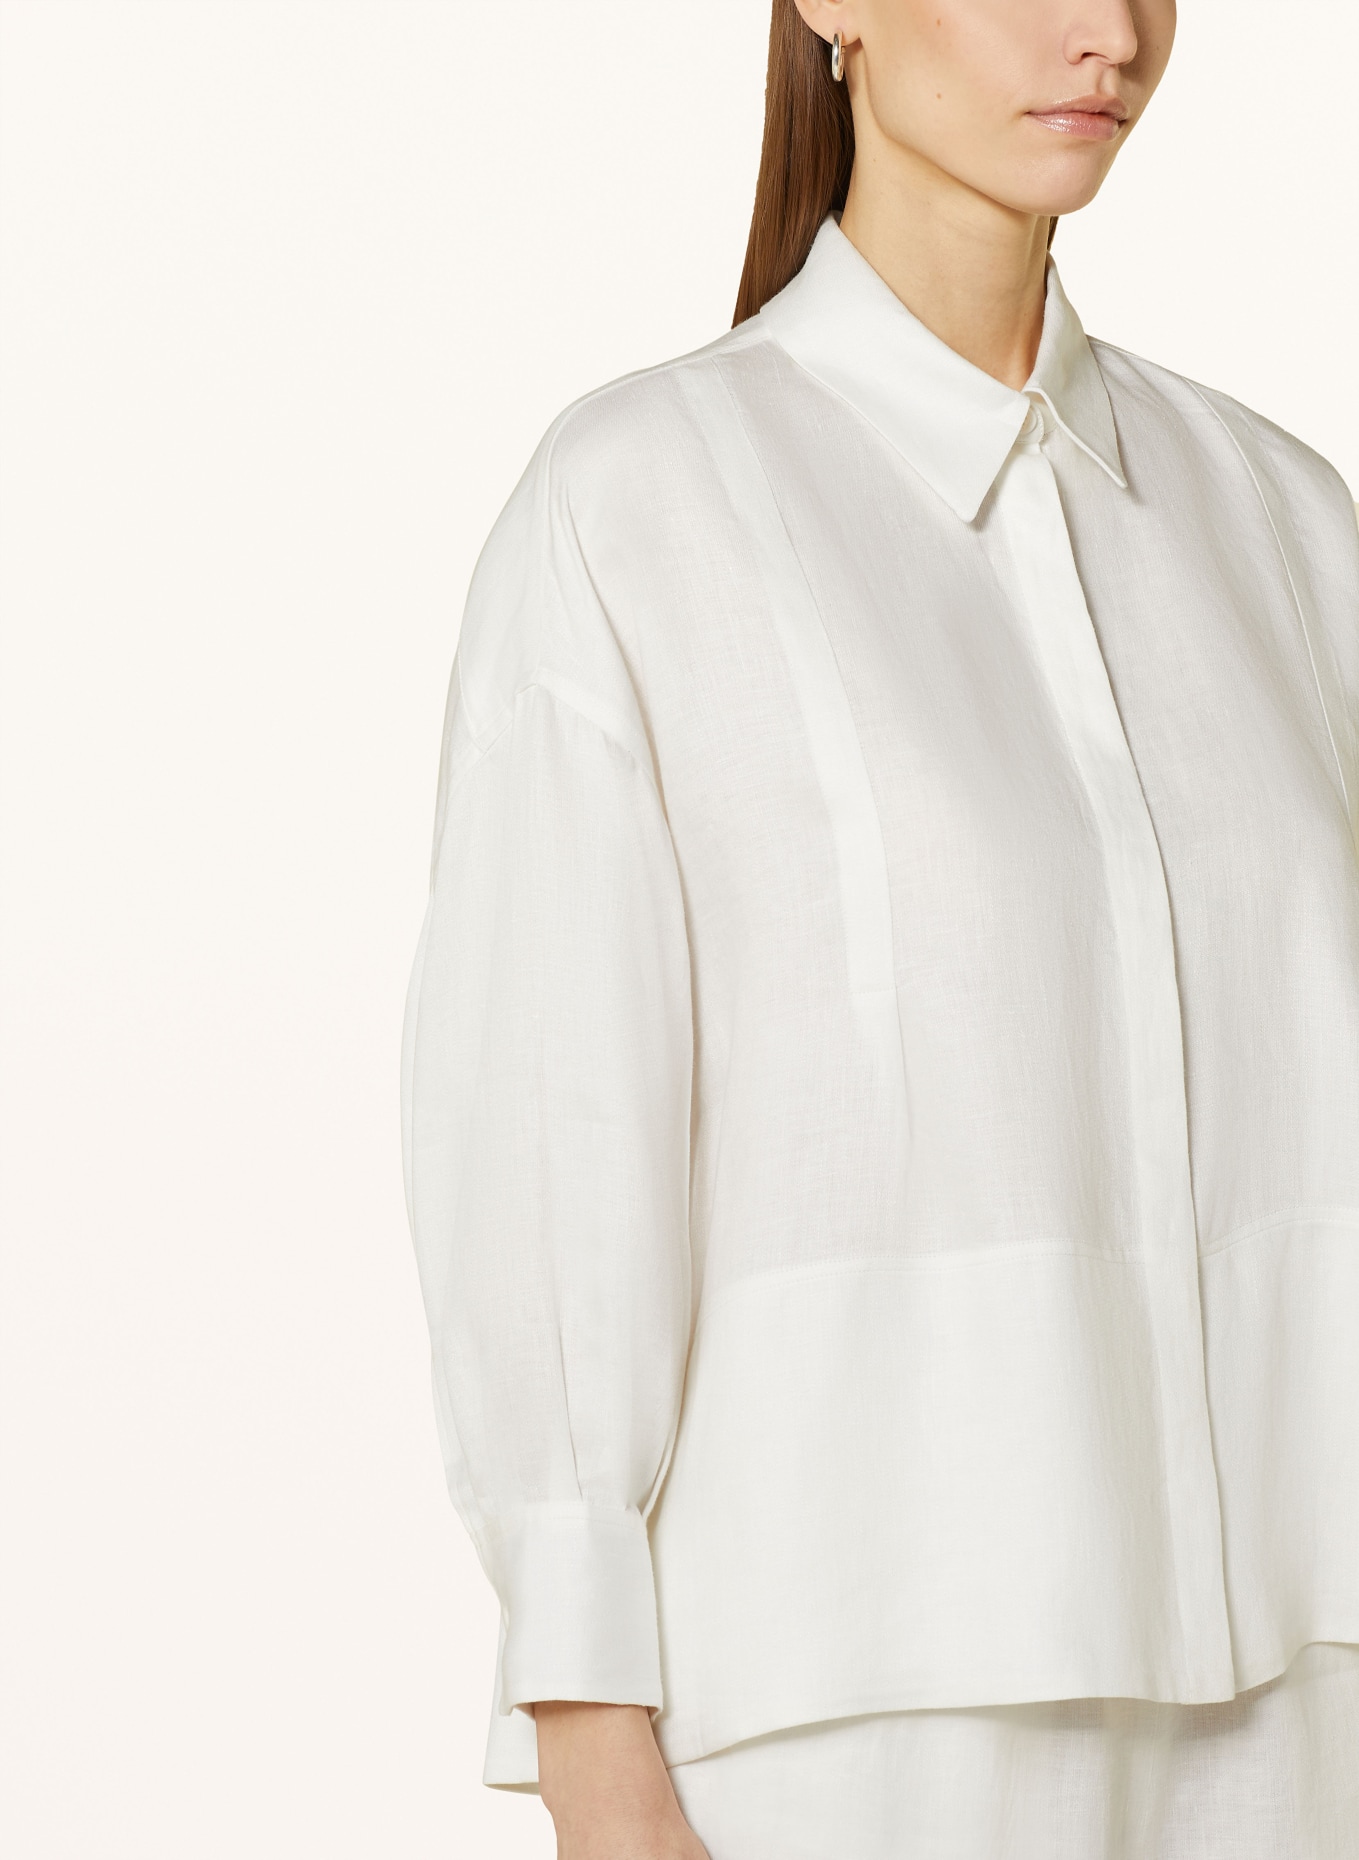 IRIS von ARNIM Shirt blouse LAURITA made of linen, Color: CREAM (Image 4)